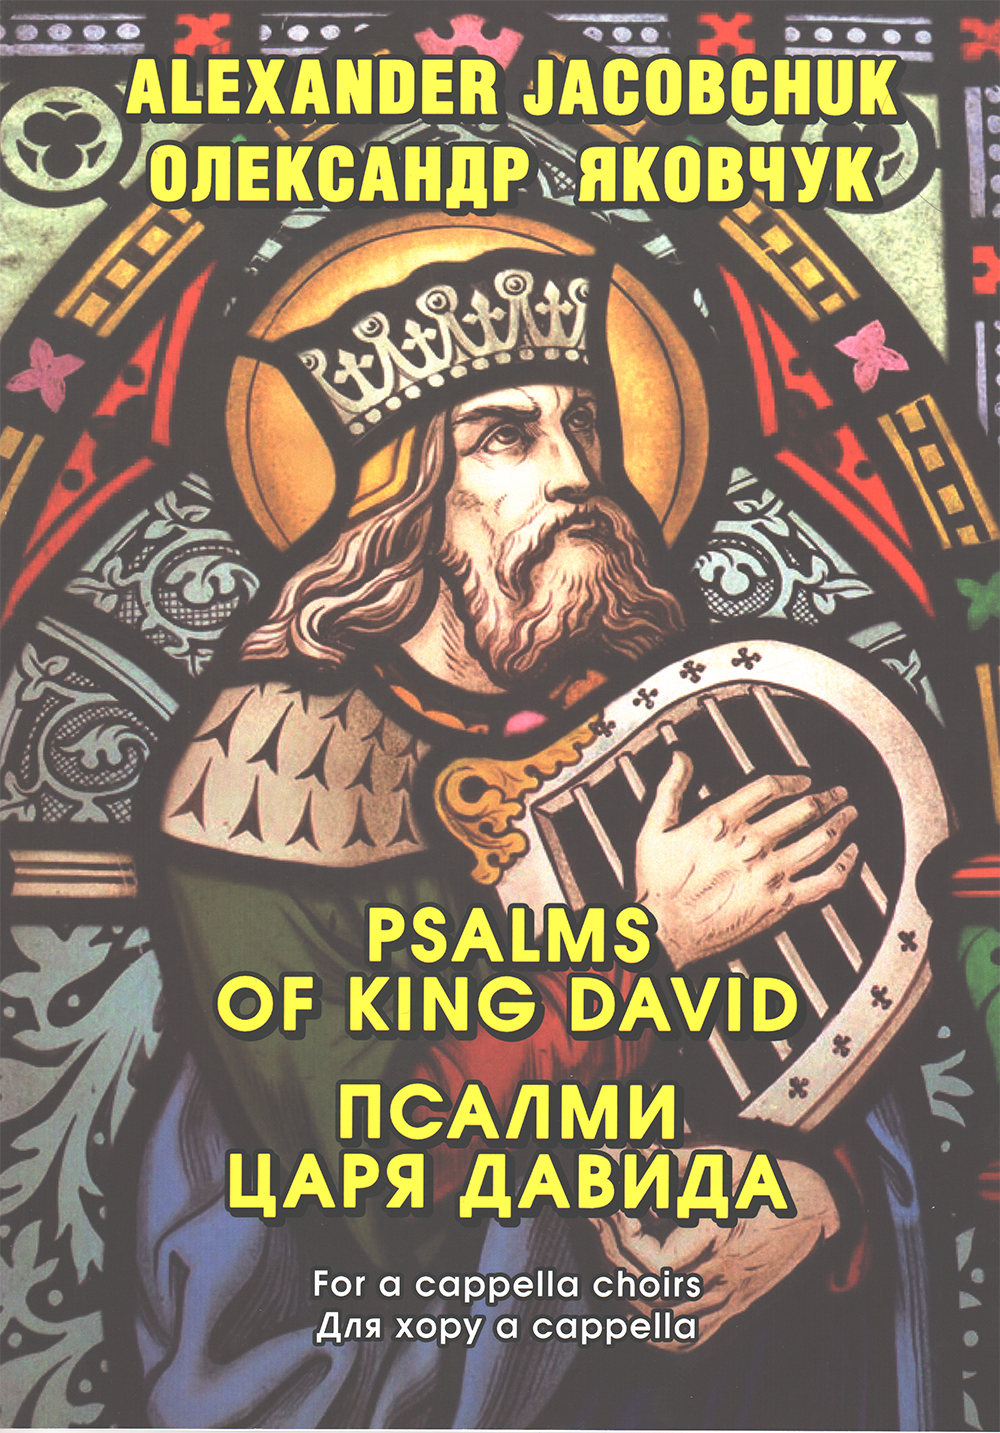 Ноты "Псалми царя Давида" для хору a cаppella